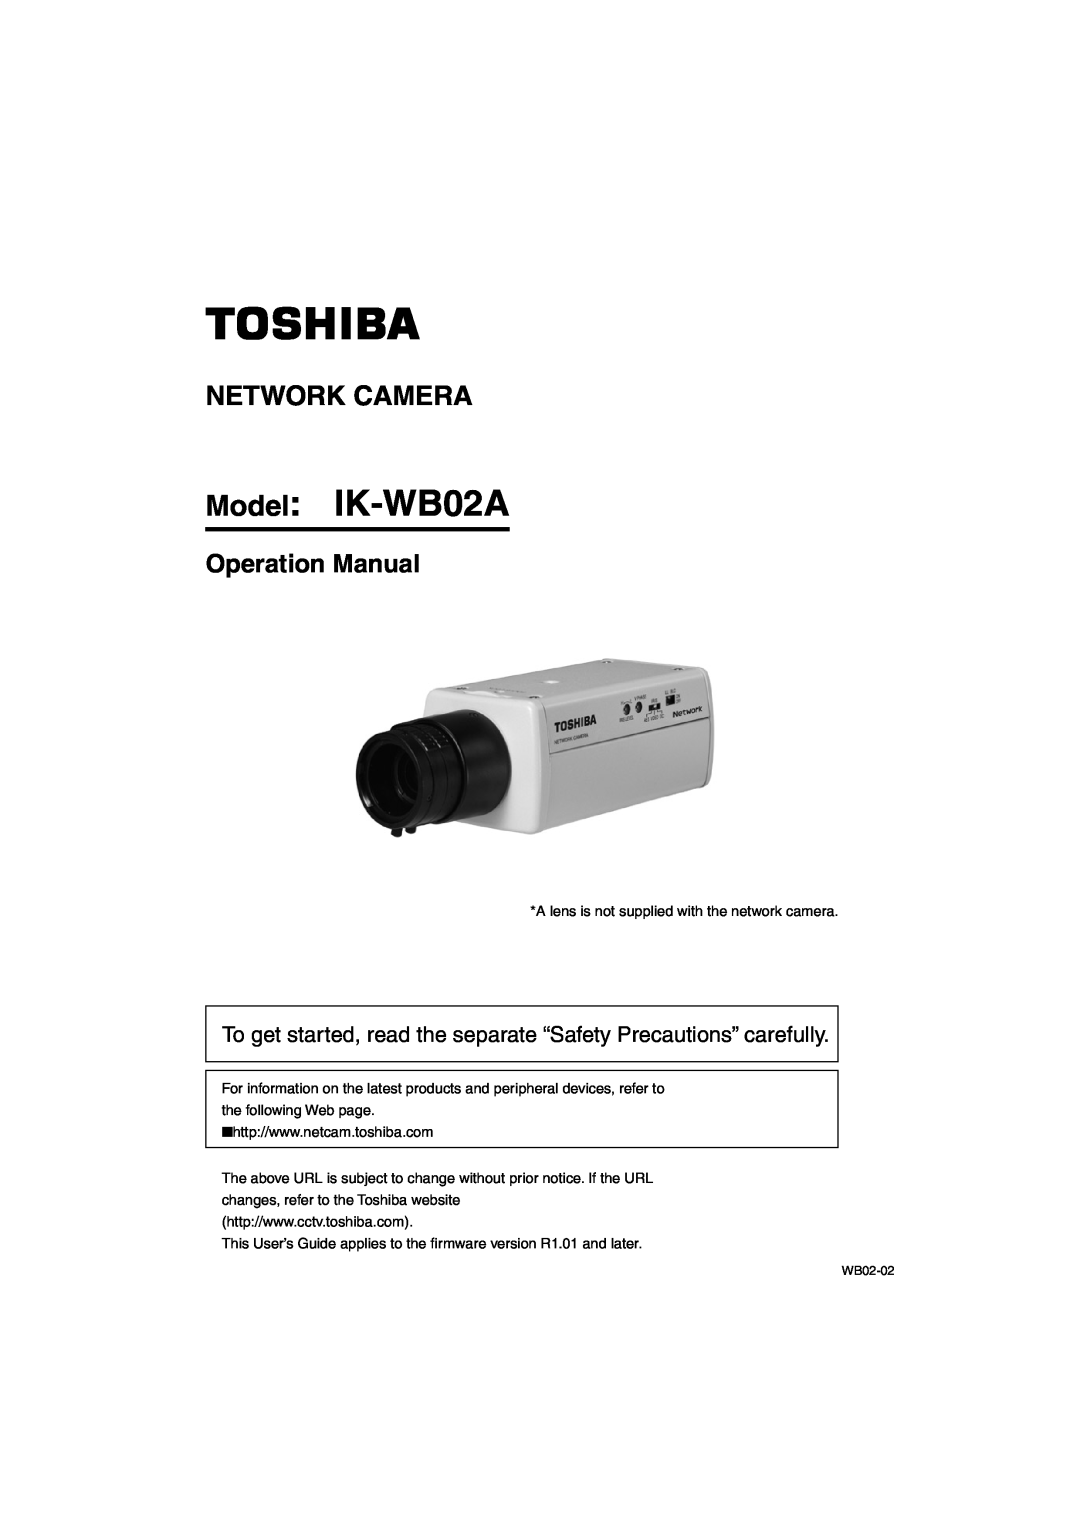 Toshiba manual Model IK-WB02A, Network Camera 